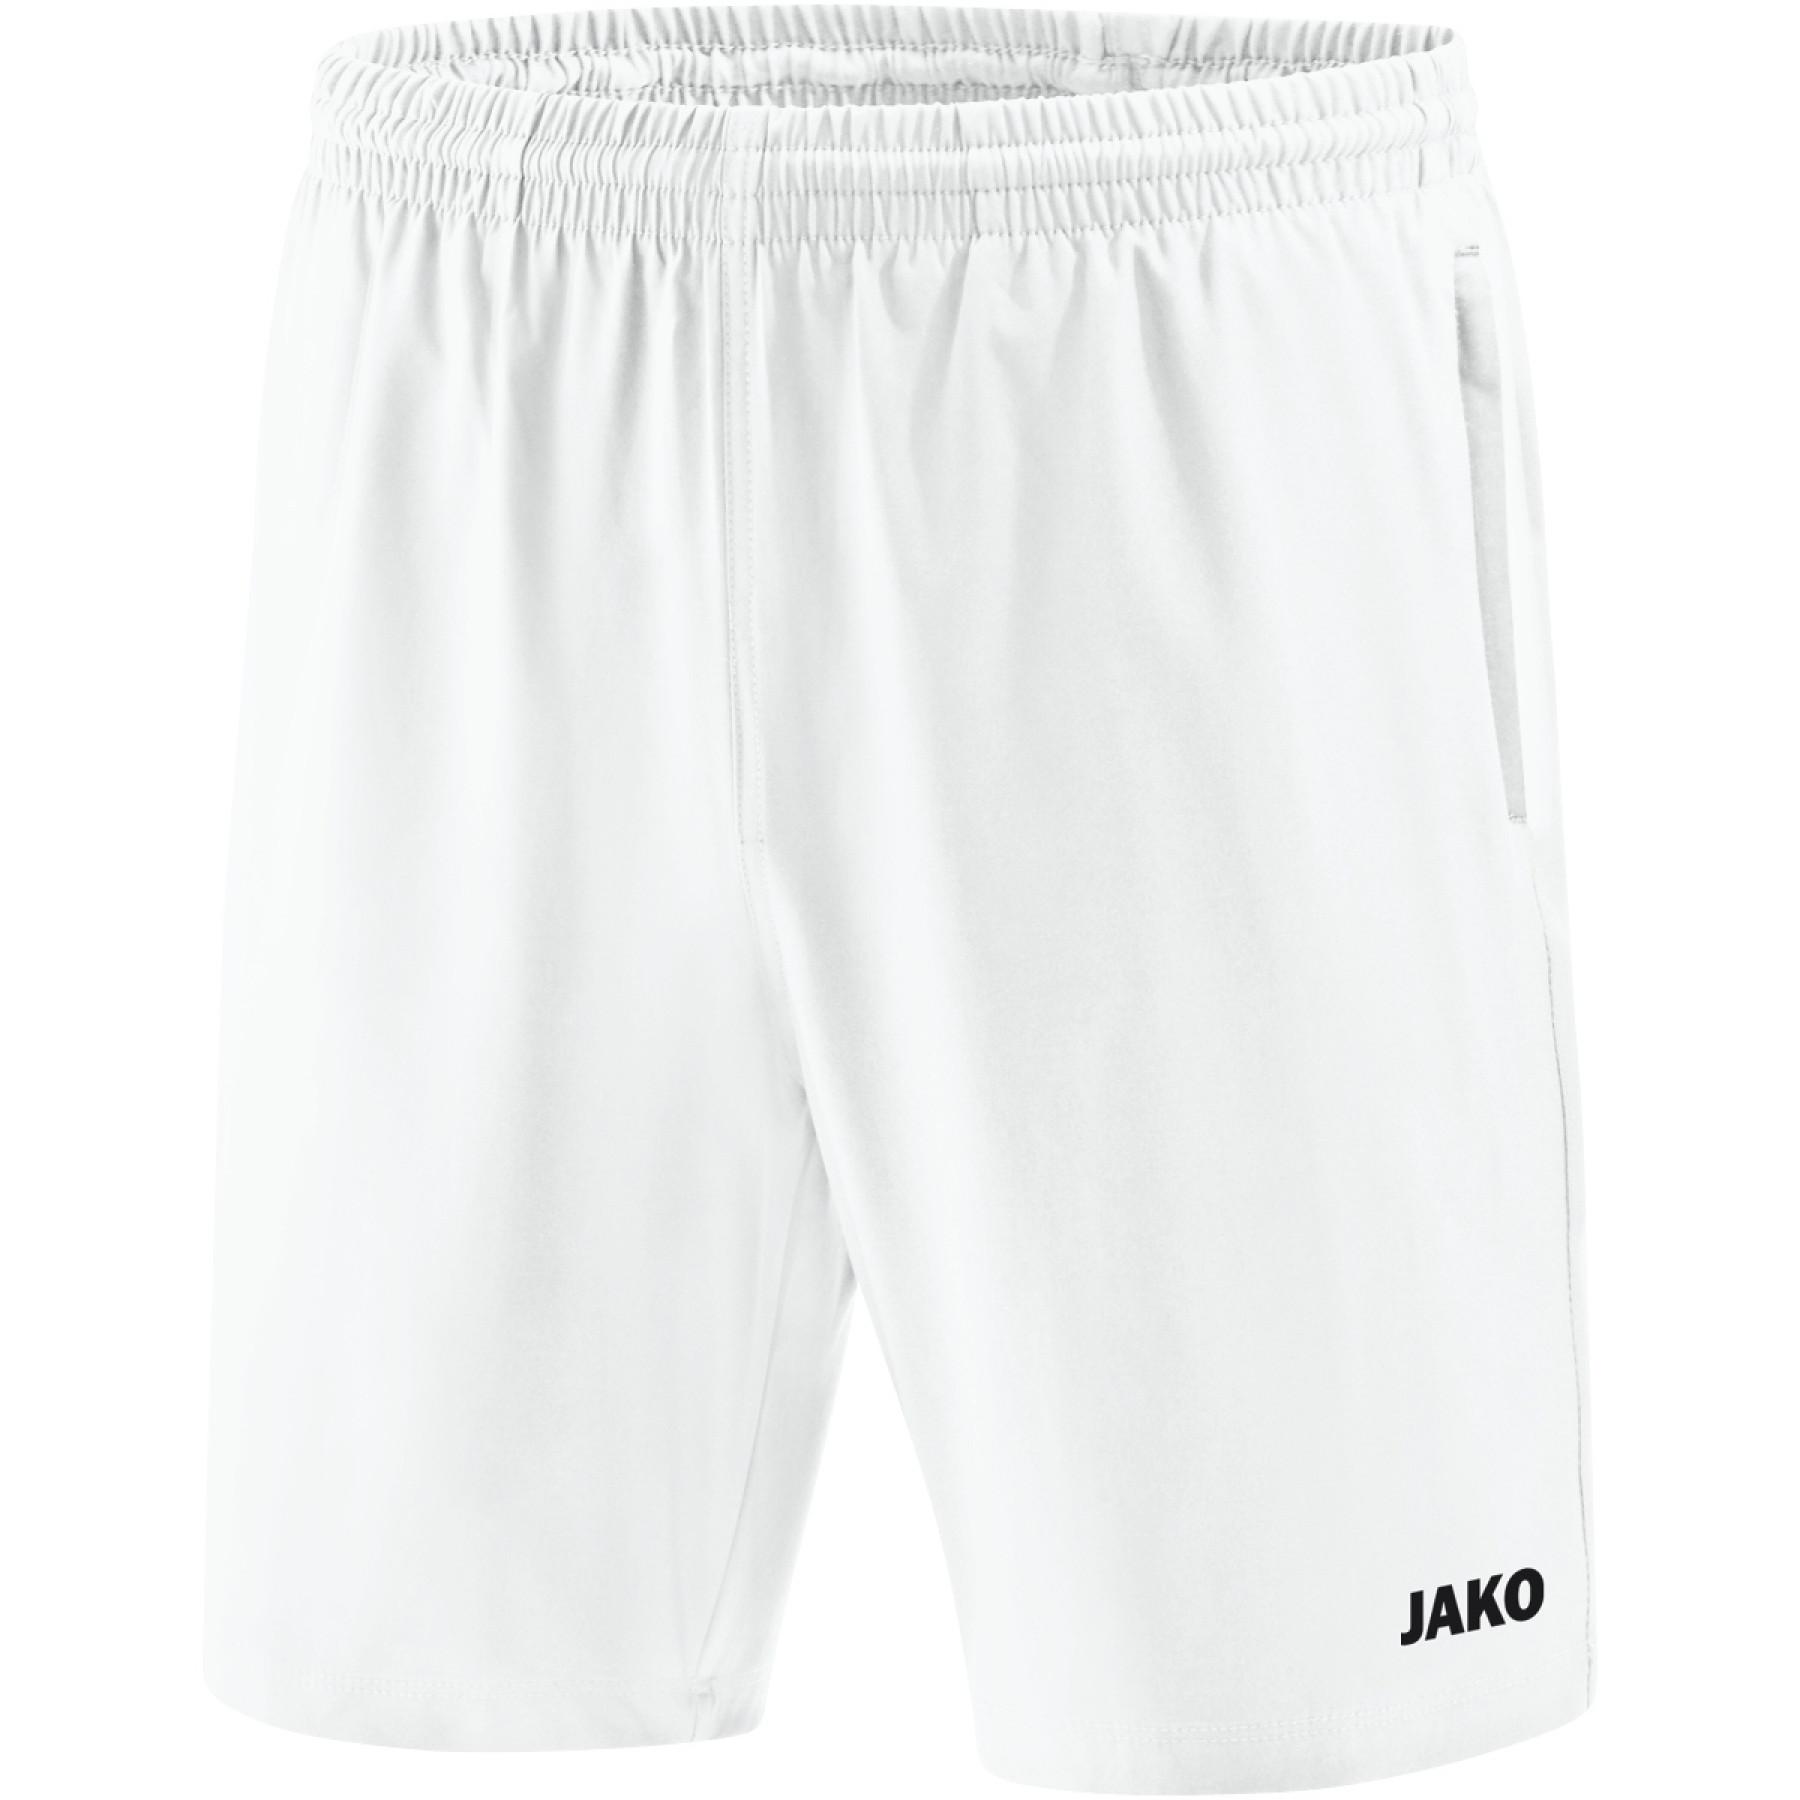 Junior Profi Shorts